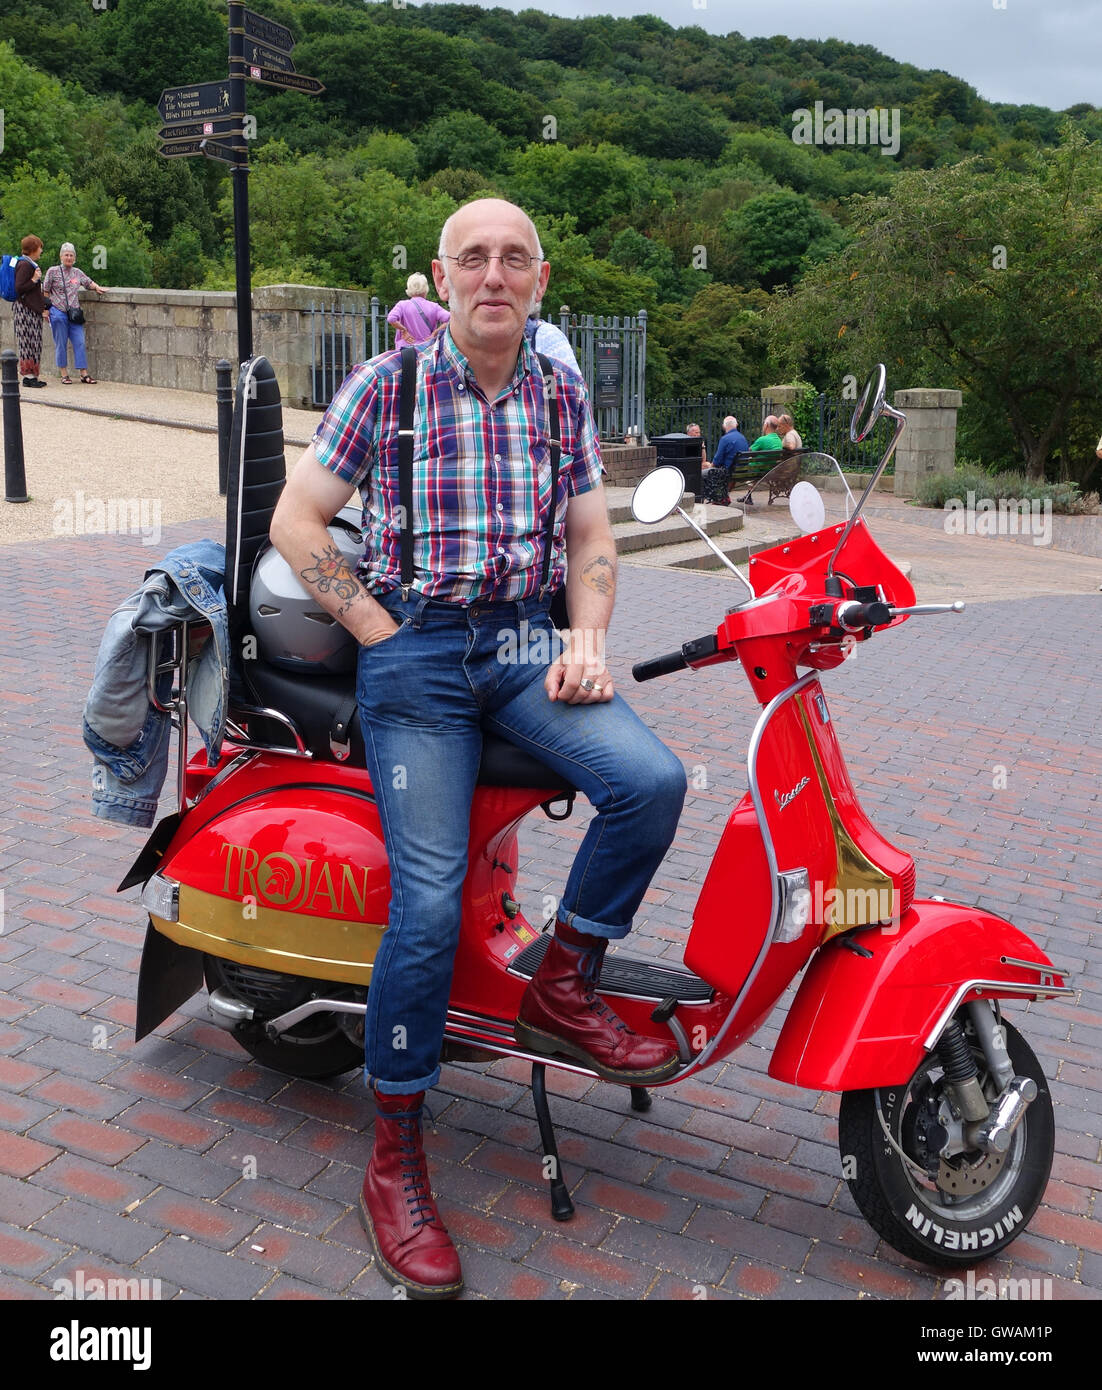 Veteran Vespa Scooter rider dressed in retro skinhead clothing UK Stock  Photo - Alamy